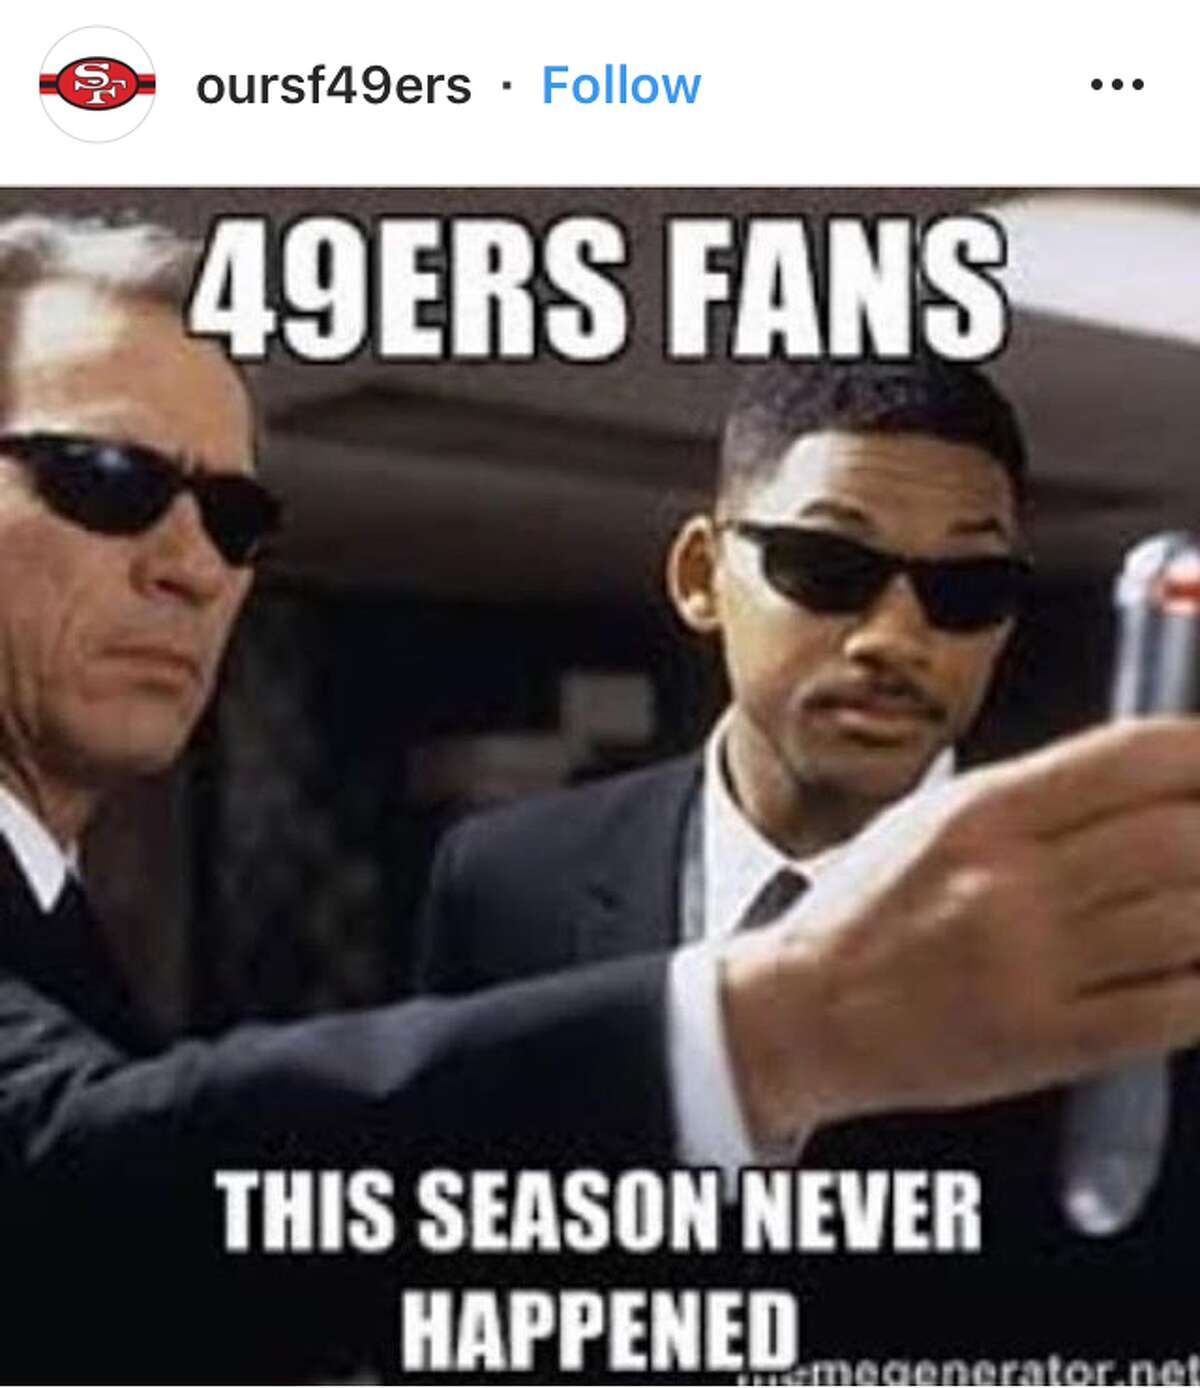 Memes wonder if 49ers will win again this season?